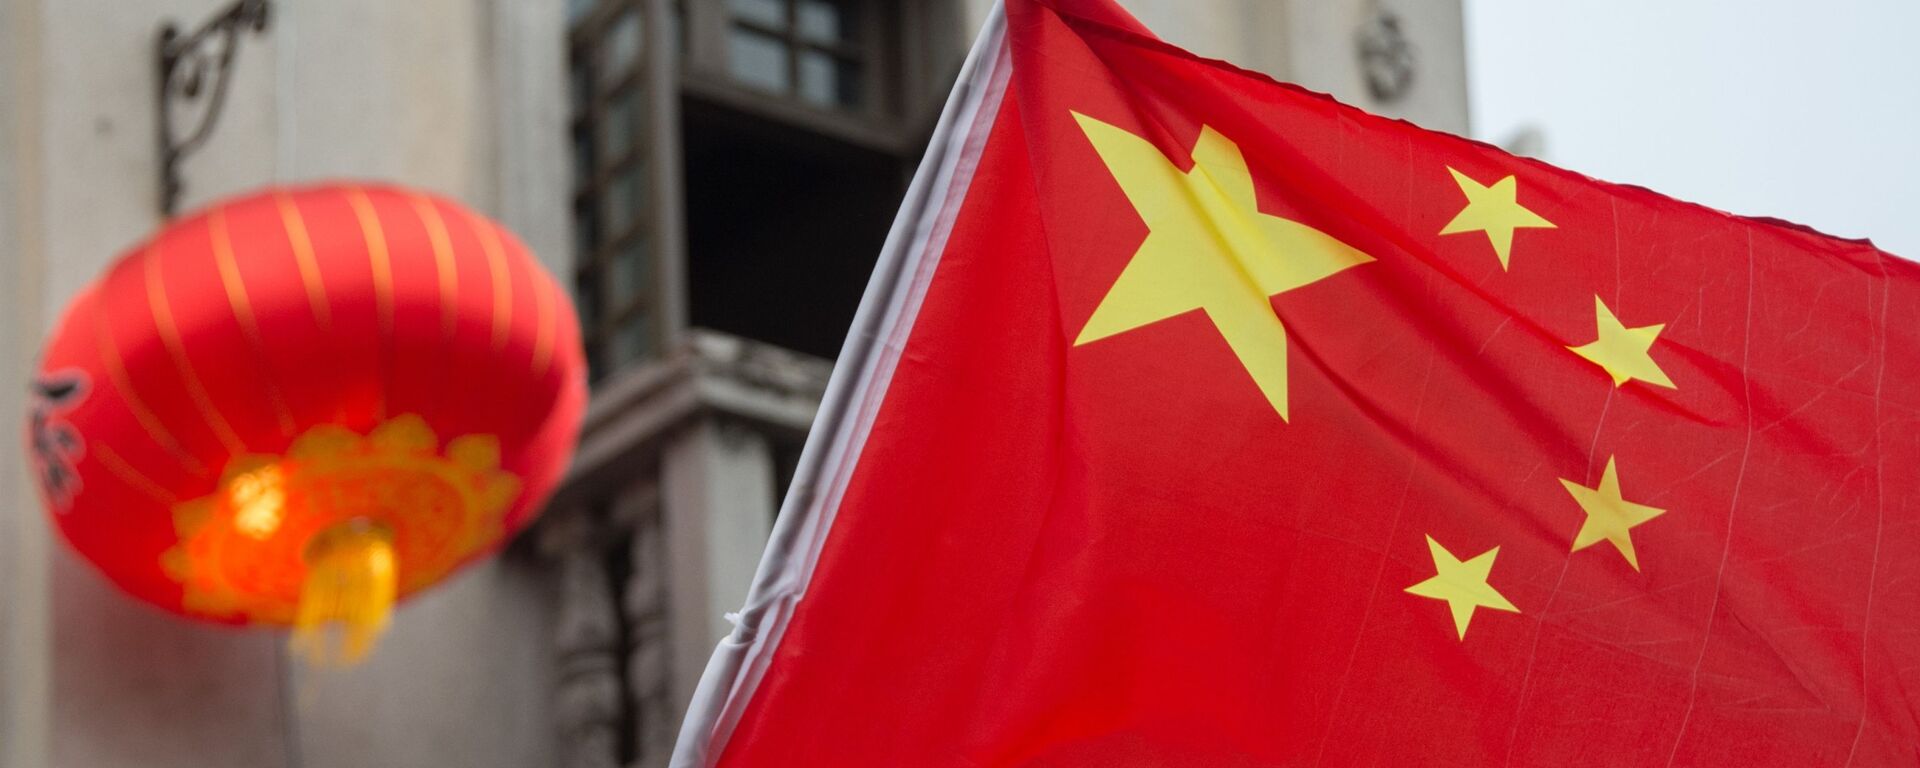 La bandera de China - Sputnik Mundo, 1920, 16.09.2021